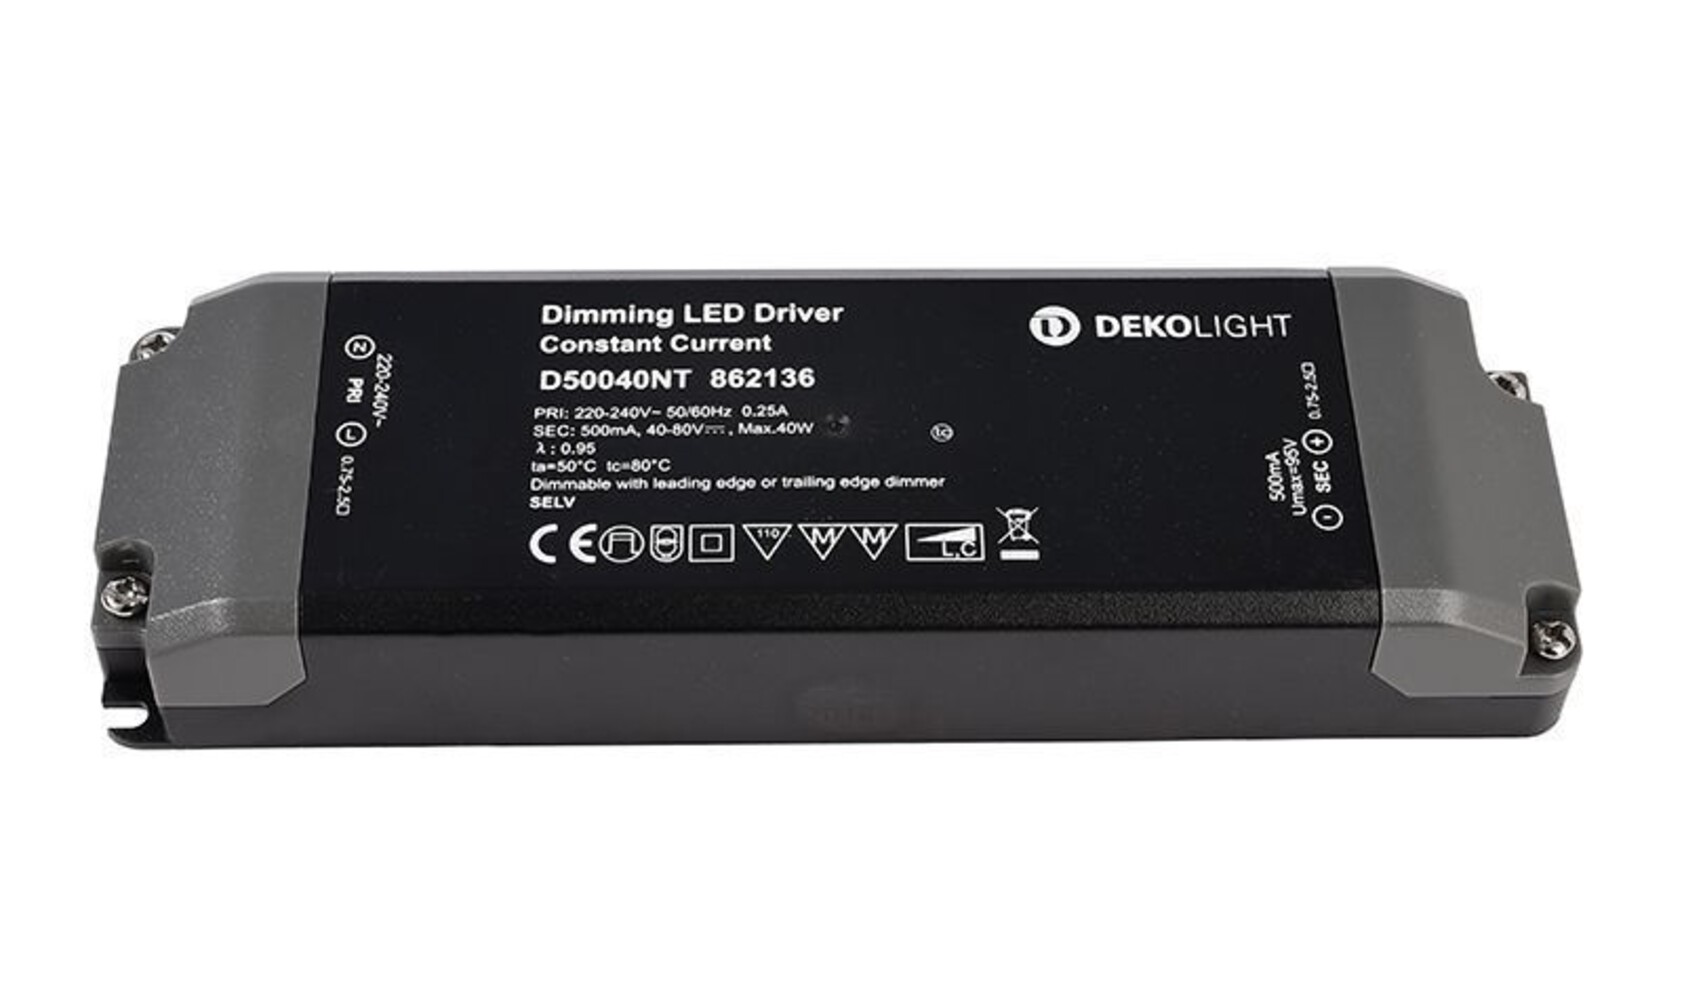 Stromkonstantes, dimmbares LED Netzteil der Marke Deko-Light